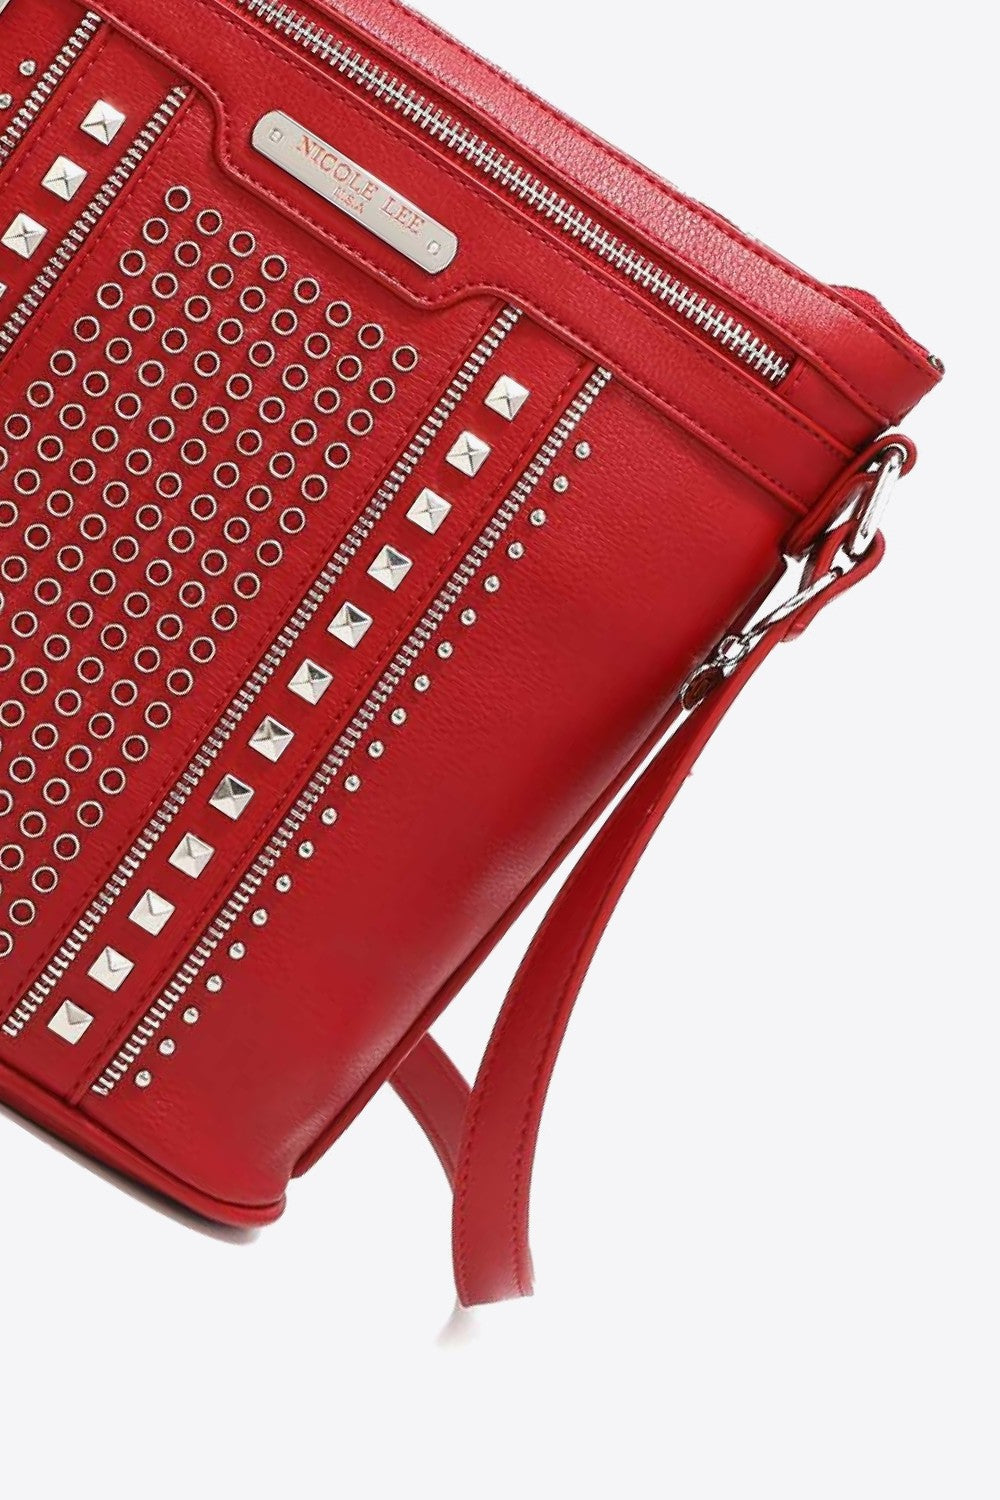 Nicole Lee USA Love Handbag - Dash Trend